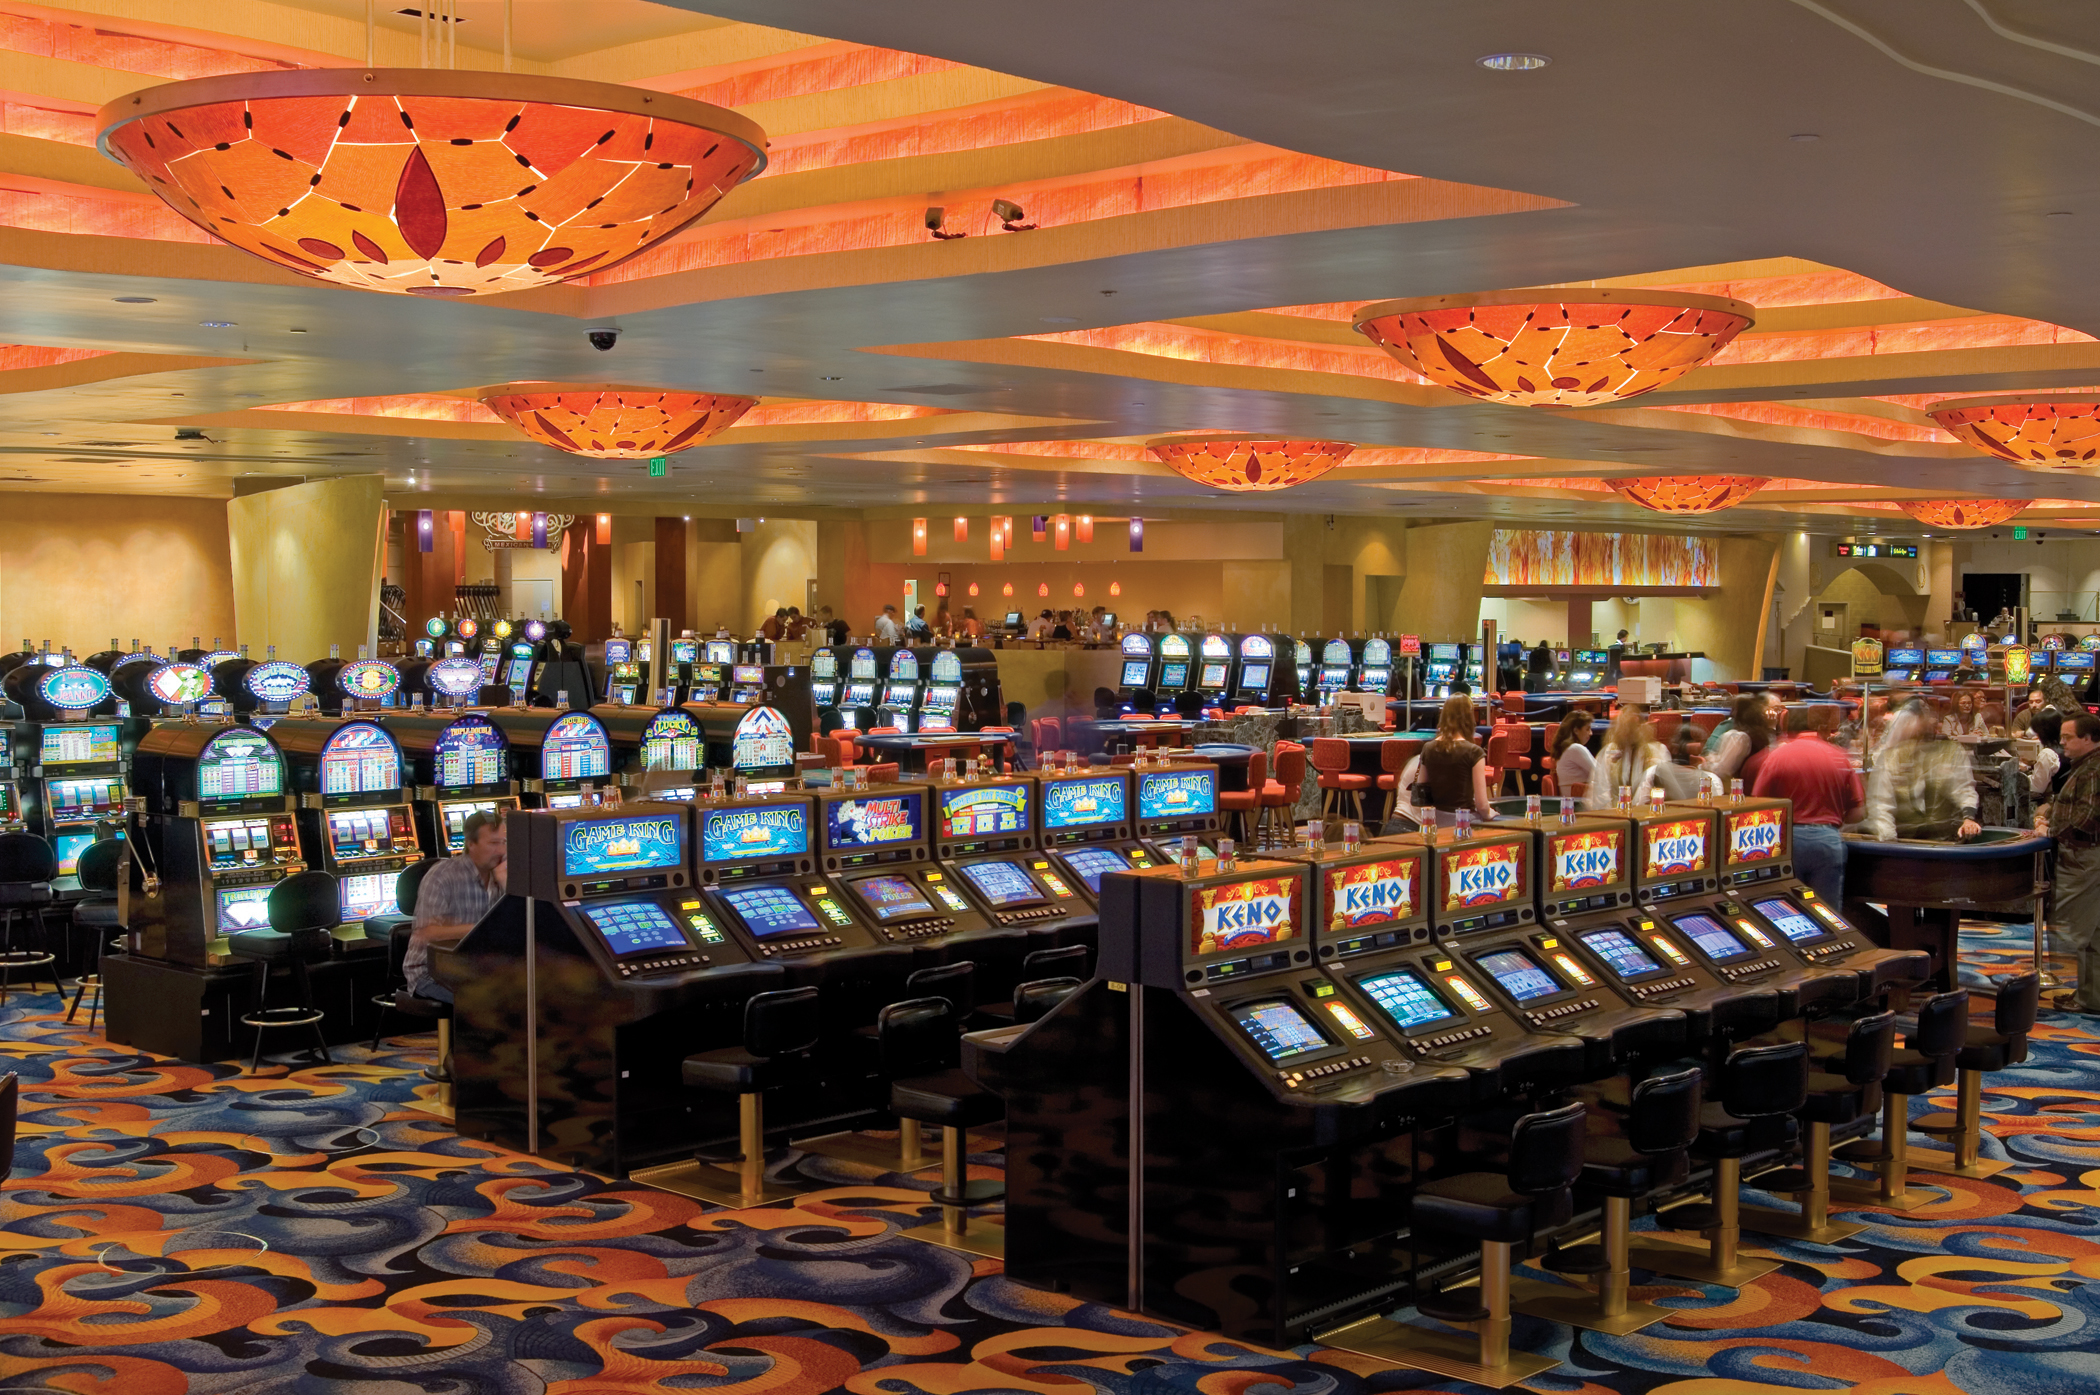 Casino | เปิดให้บริการแล้ว Gclub Holiday palace  คาสิโนออนไลน์ชั้นนำและผู้ให้บริการ Sbobet  อย่างเป็นทางการร่วมสนุกได้แล้ววันนี้